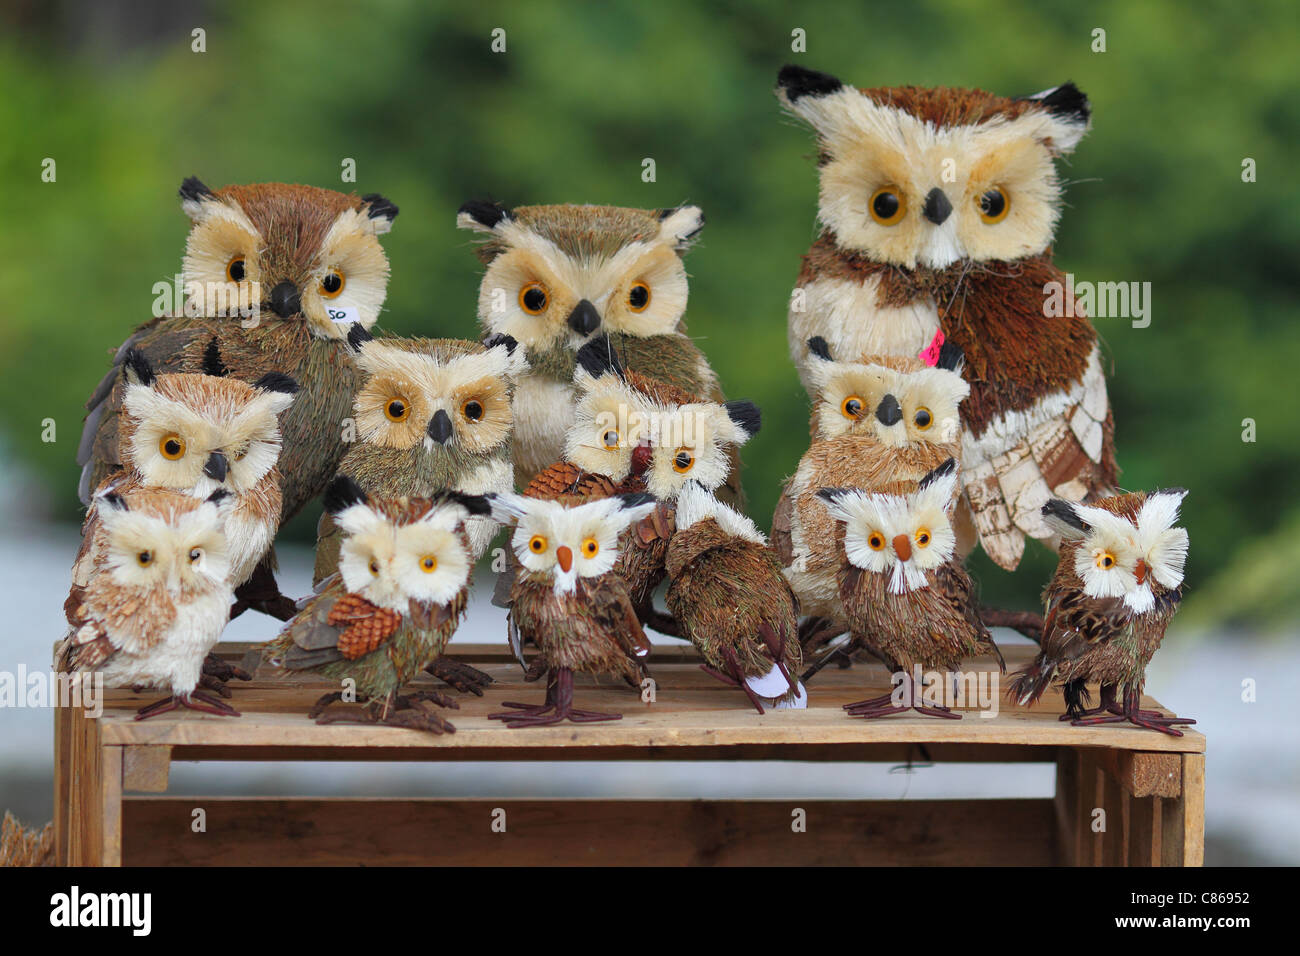 Owls made of hay handicraft craftsmanship of Poland Stock Photo